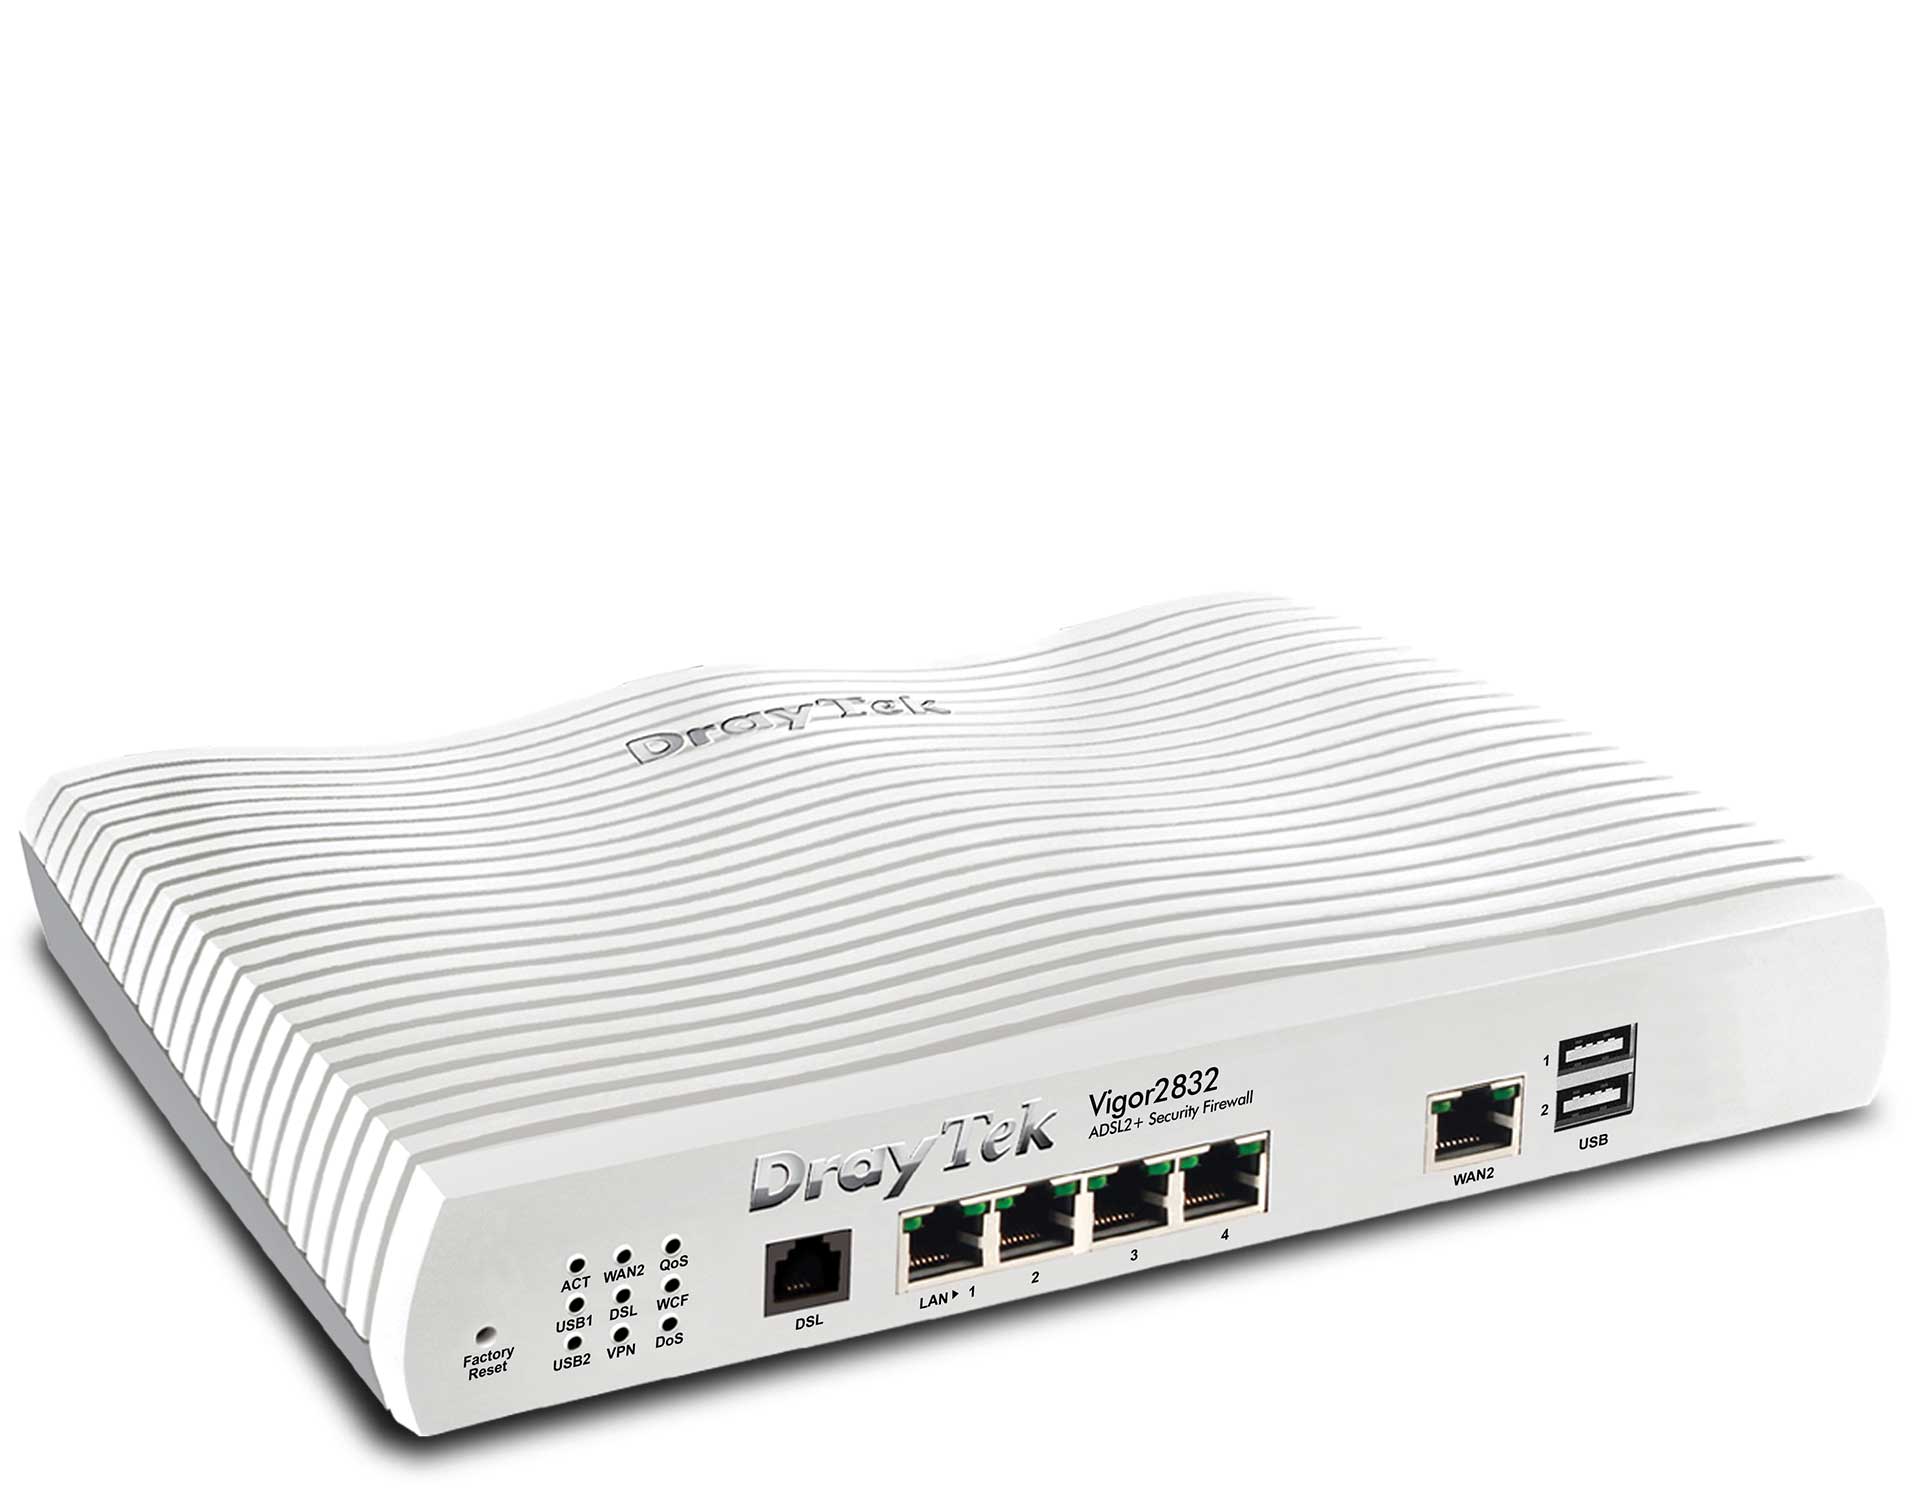 Draytek Vigor 2832 ADSL2+ Modem & GbE Ethernet Load Balancing Router